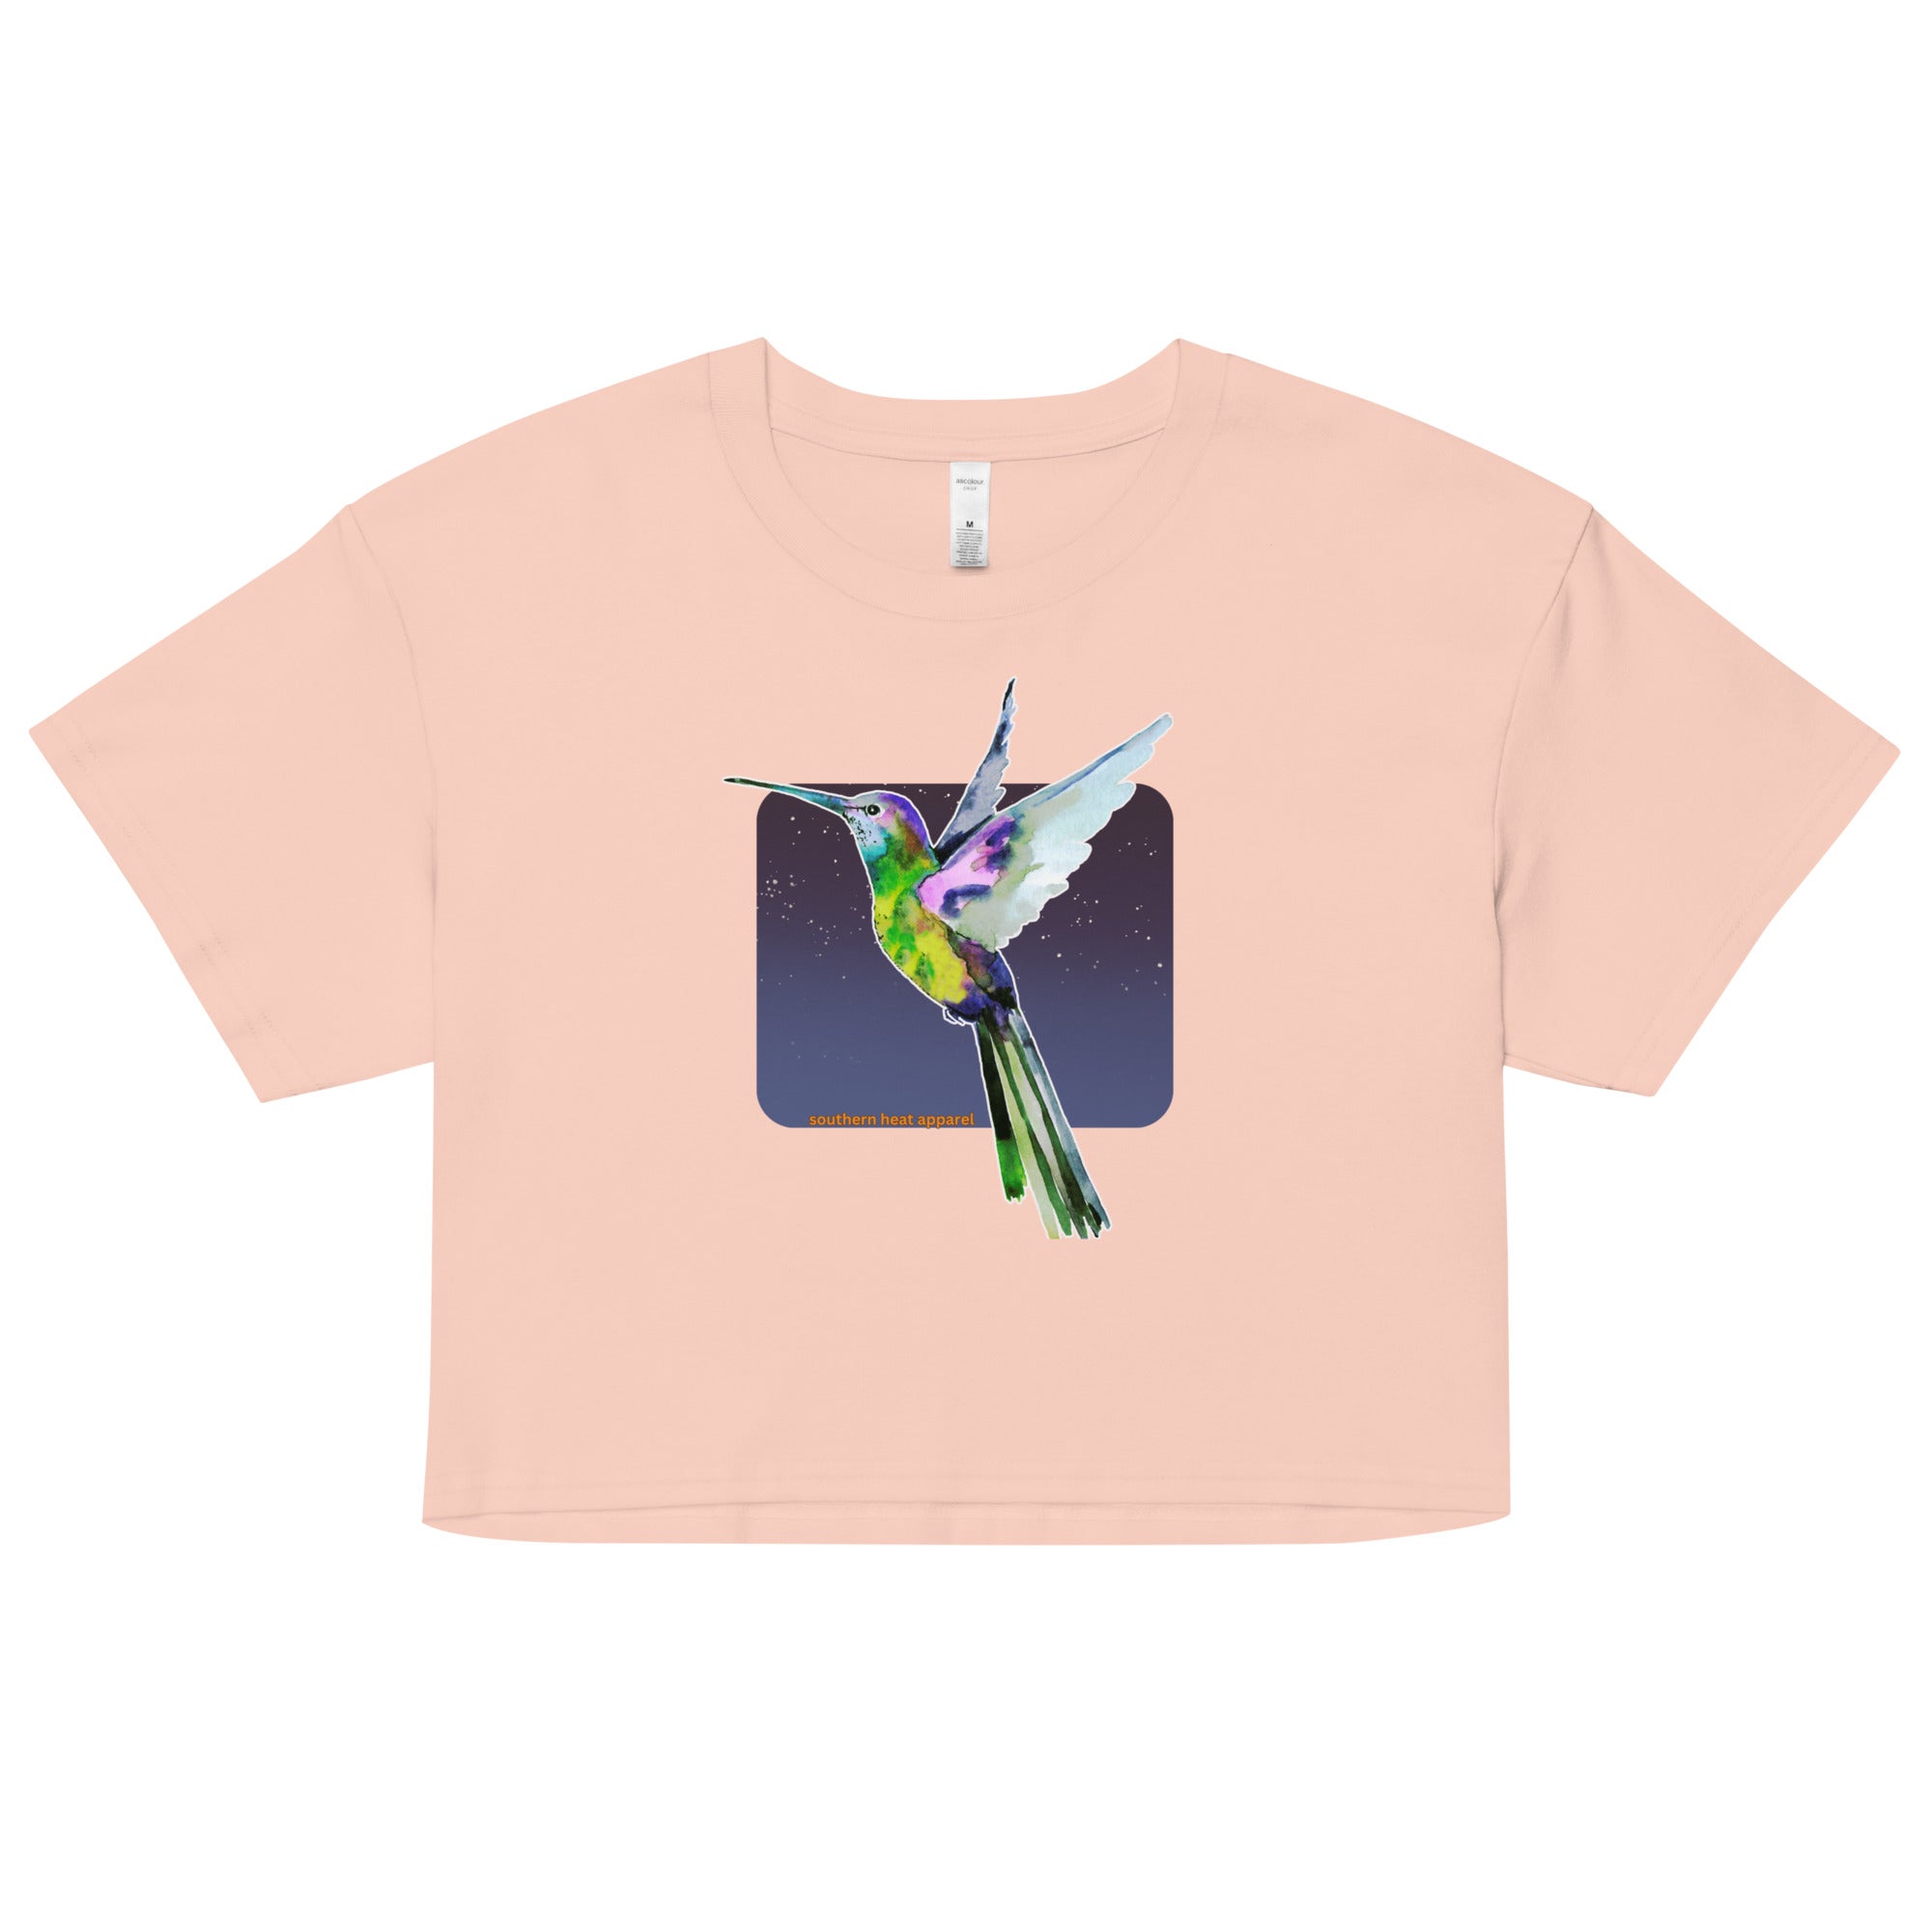 Hummingbird.at.night-Women’s crop top